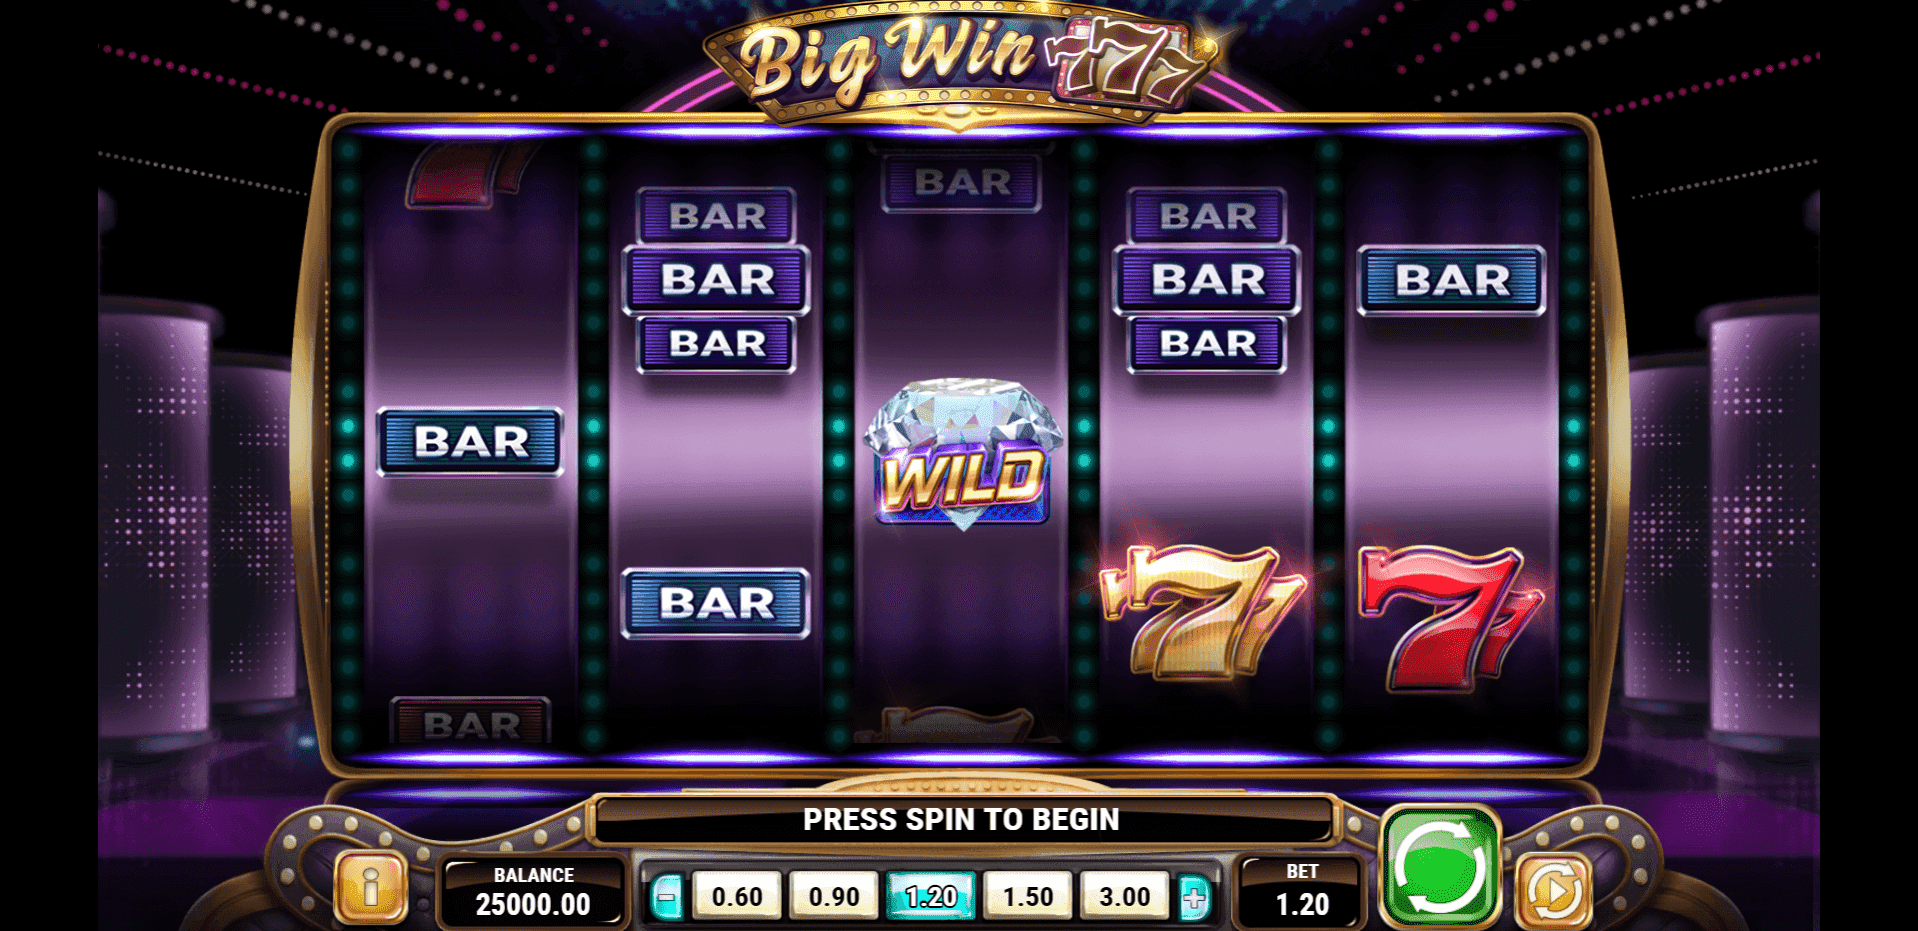 Big Win 777 slot play free